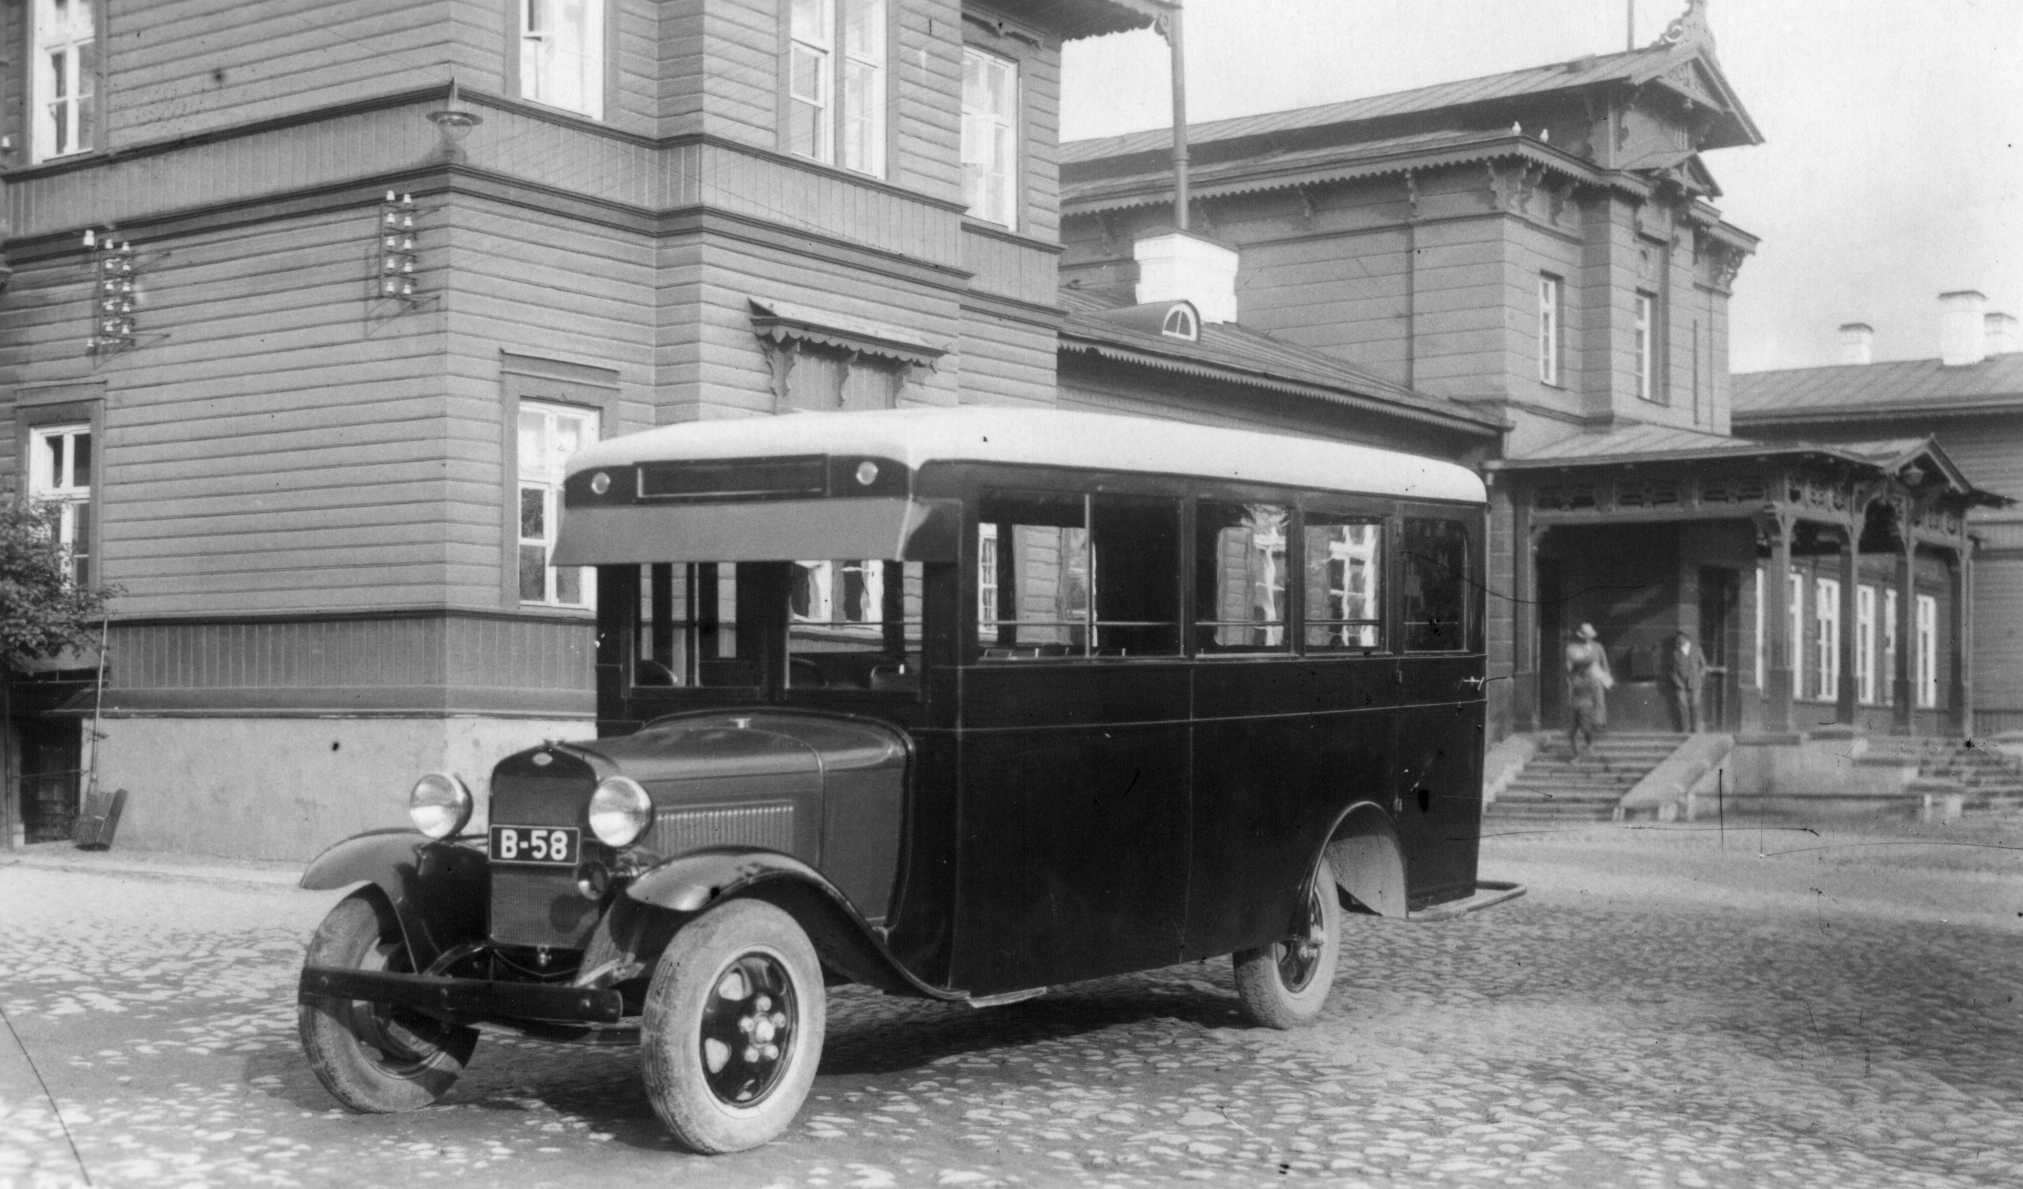 Tartu Railway Station, Omnibus (bus) in front of it. Tartu, 1920-1930.